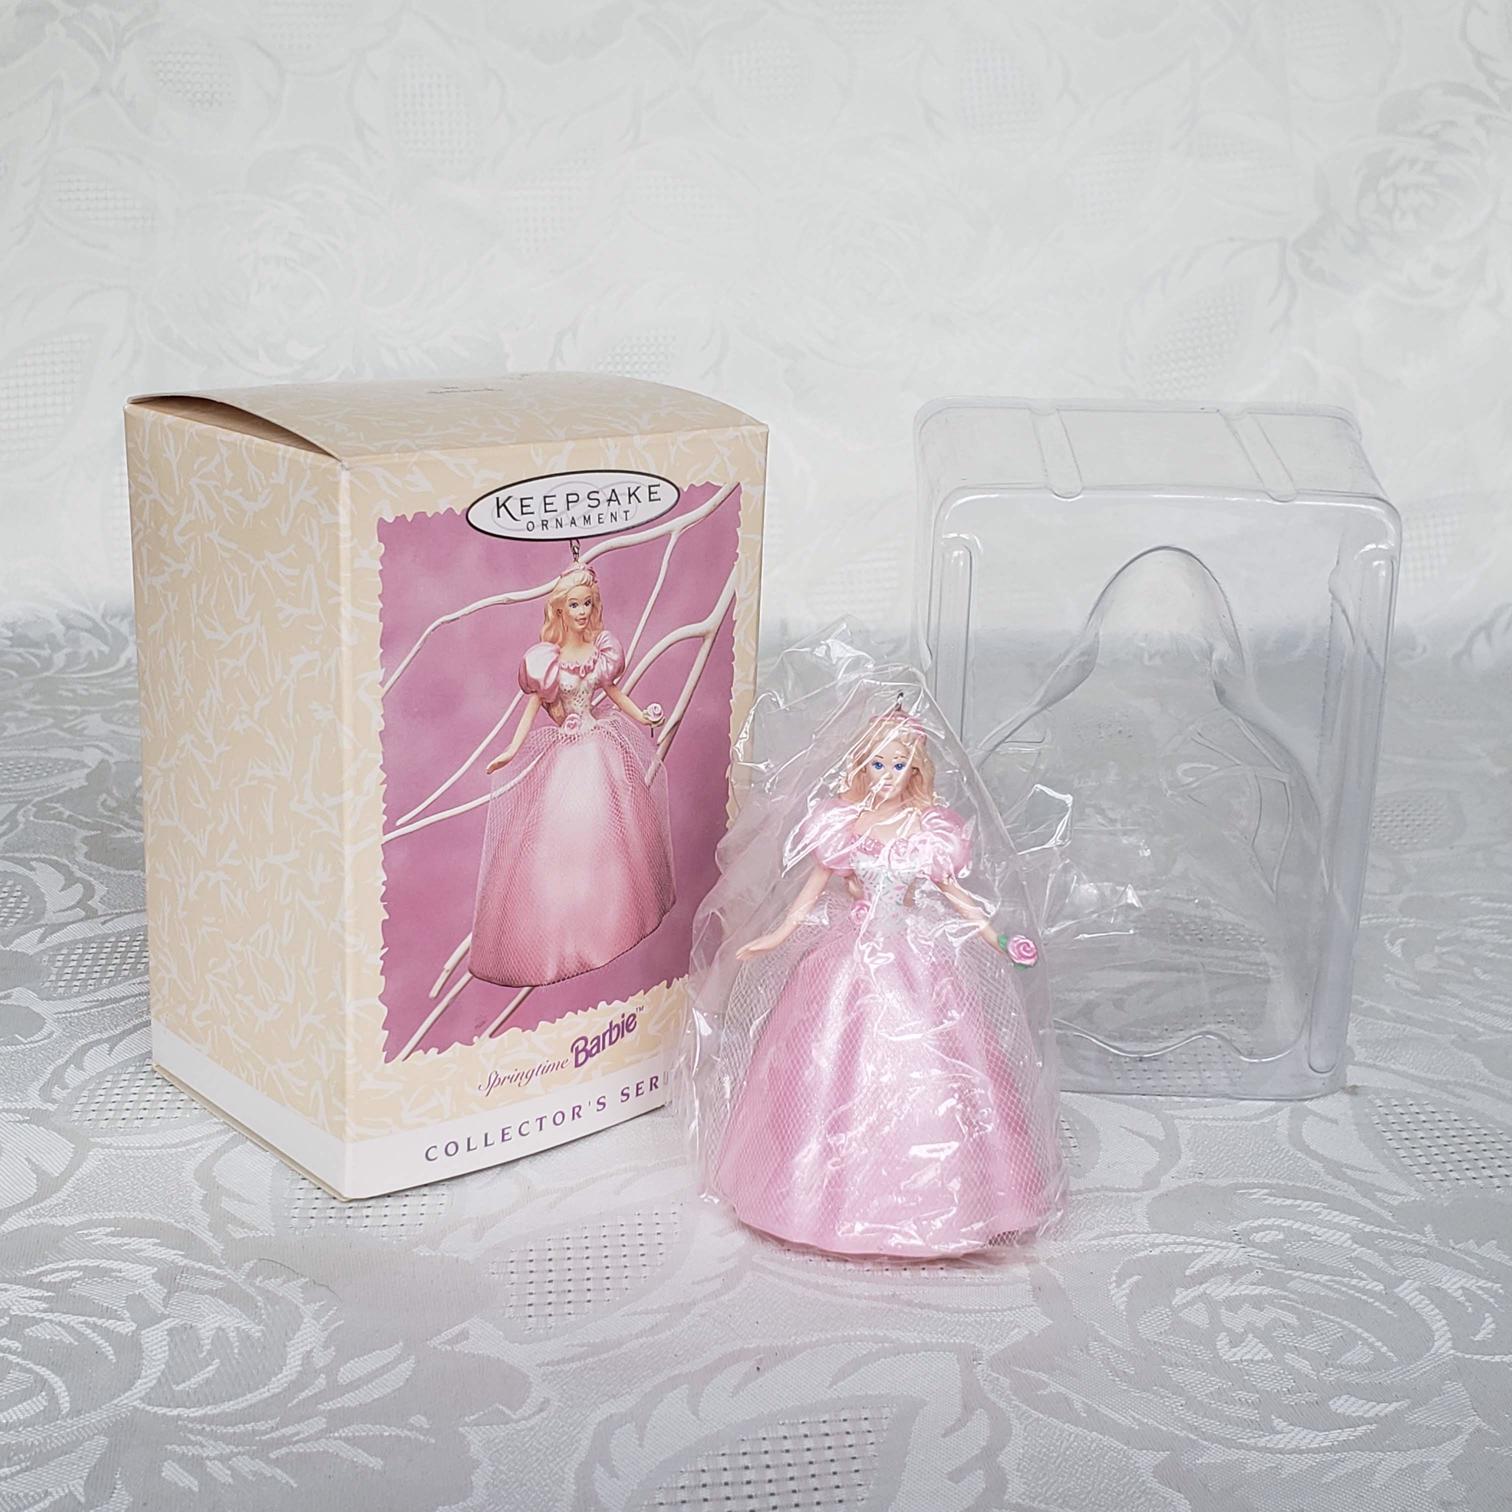 1999 Spring, Barbie Lunchbox Hallmark Ornament